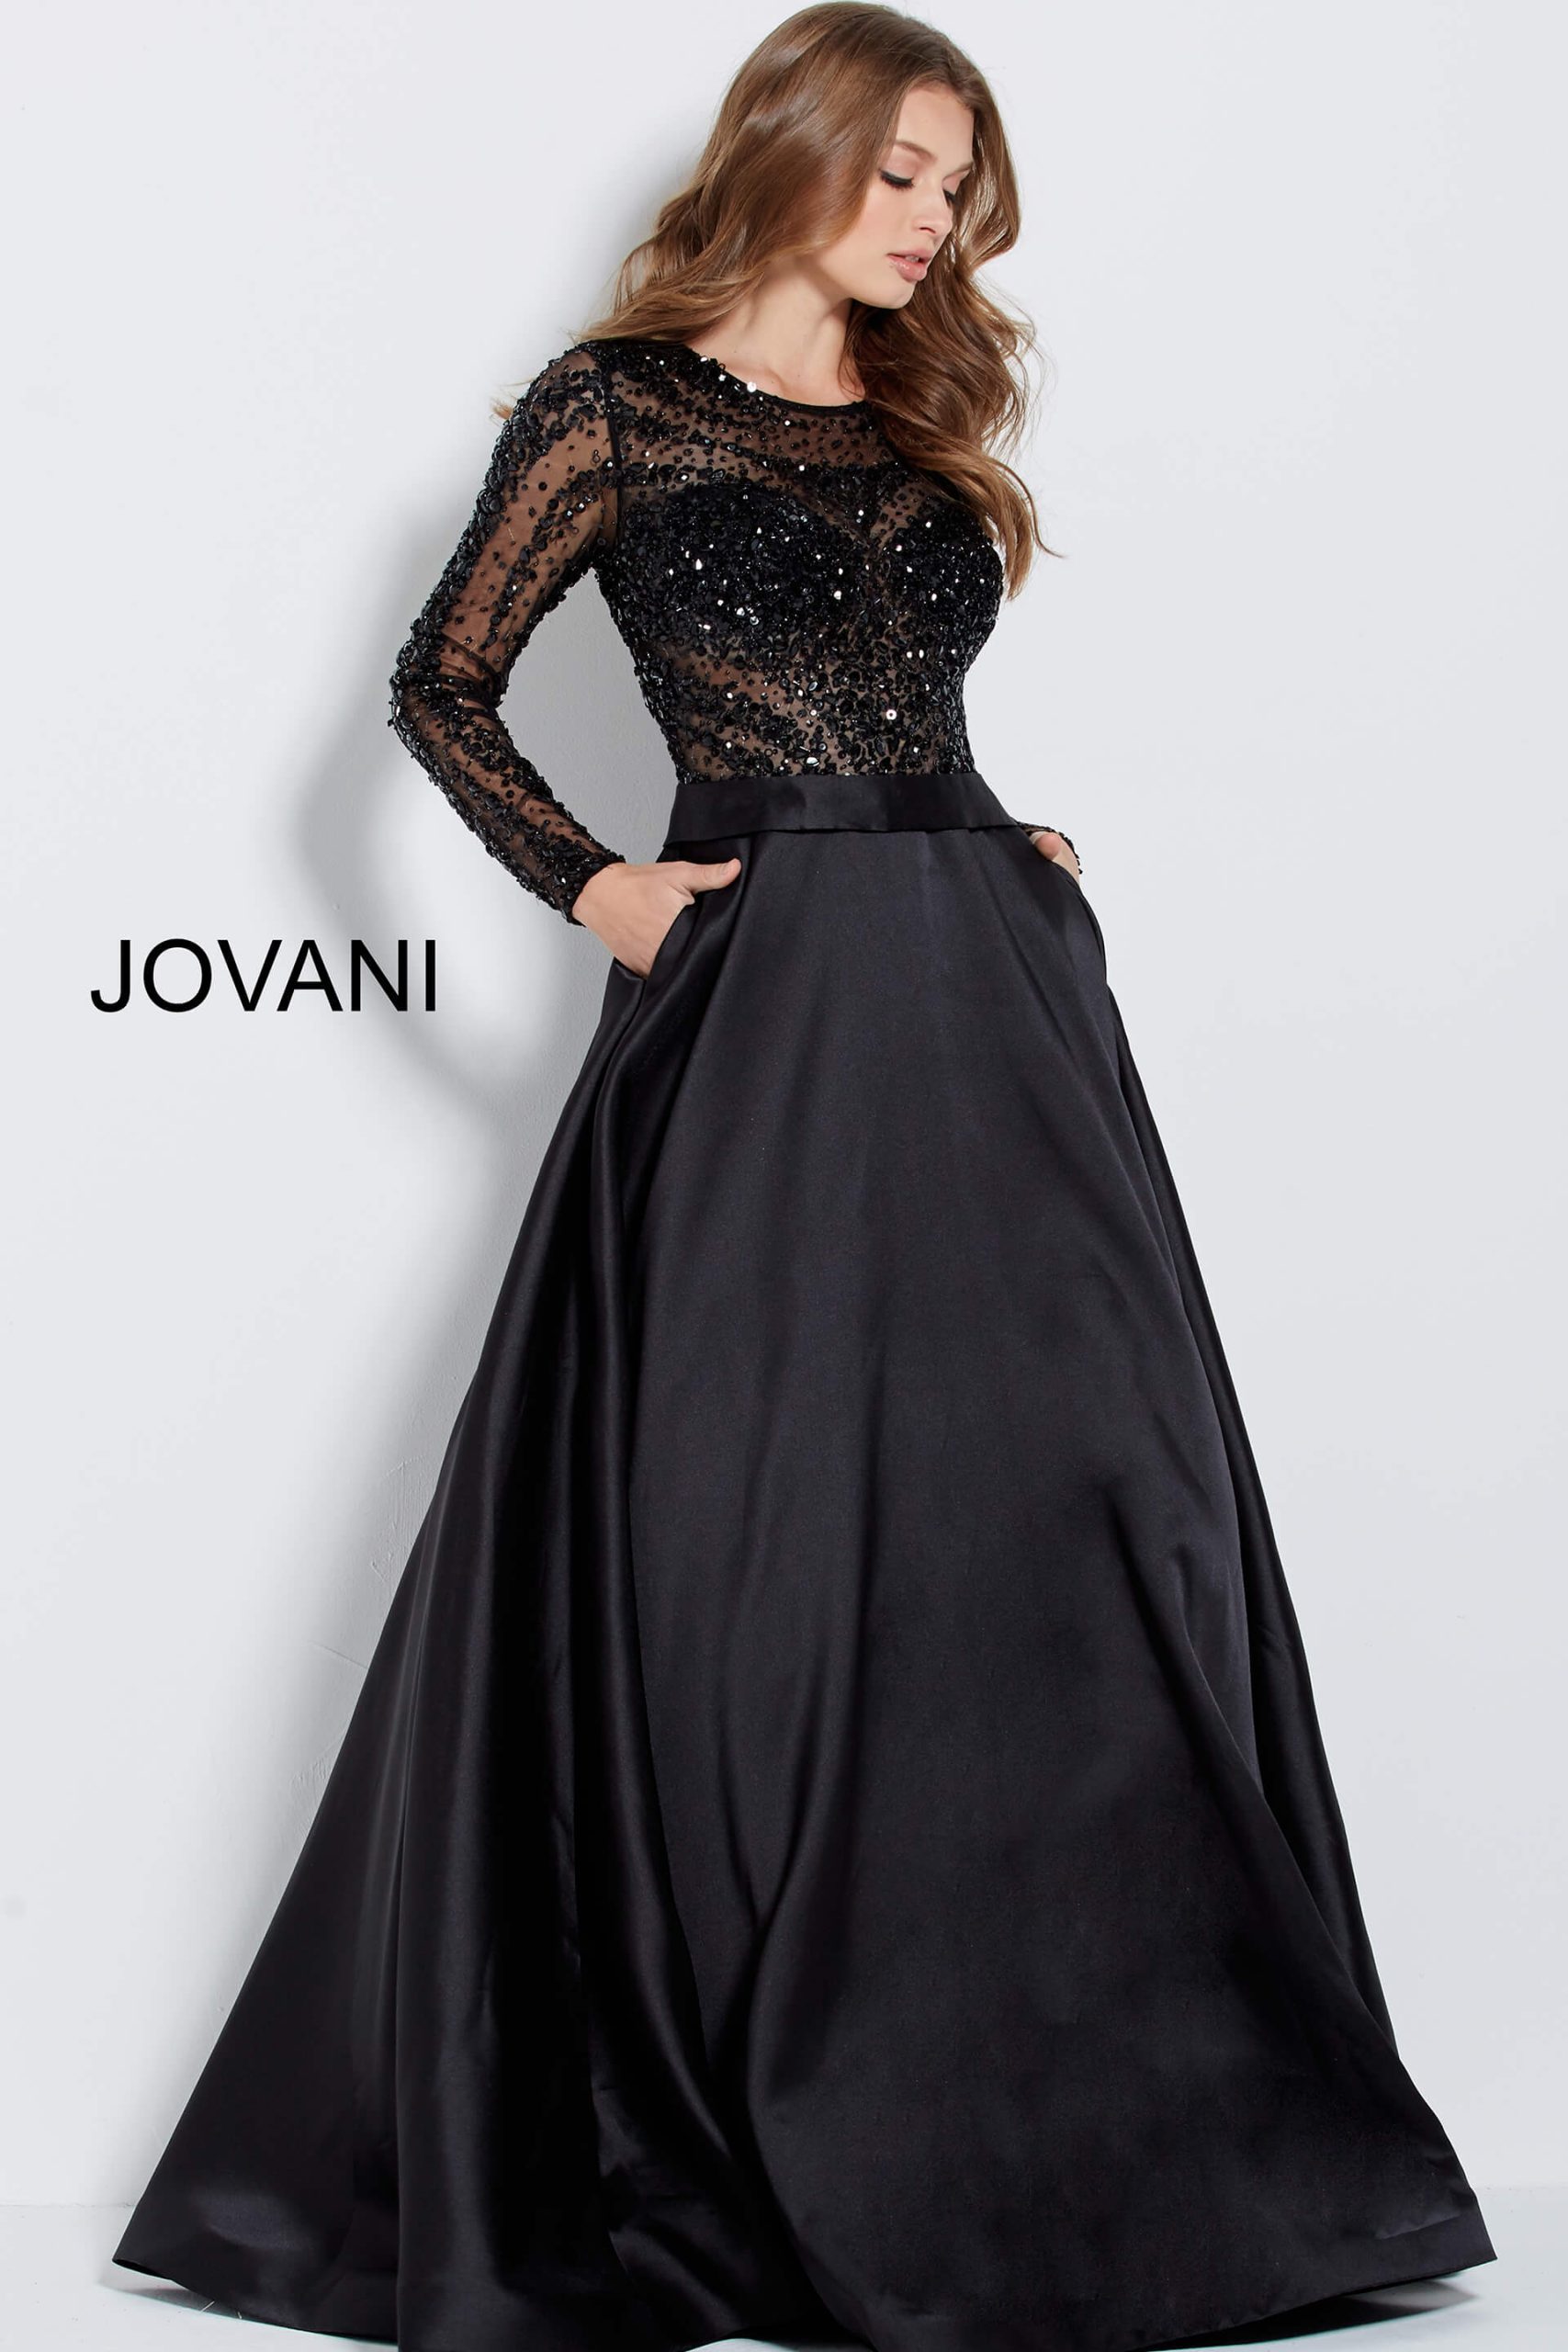 Jovani 46066 Black Beaded Bodice Long Sleeve Ballgown